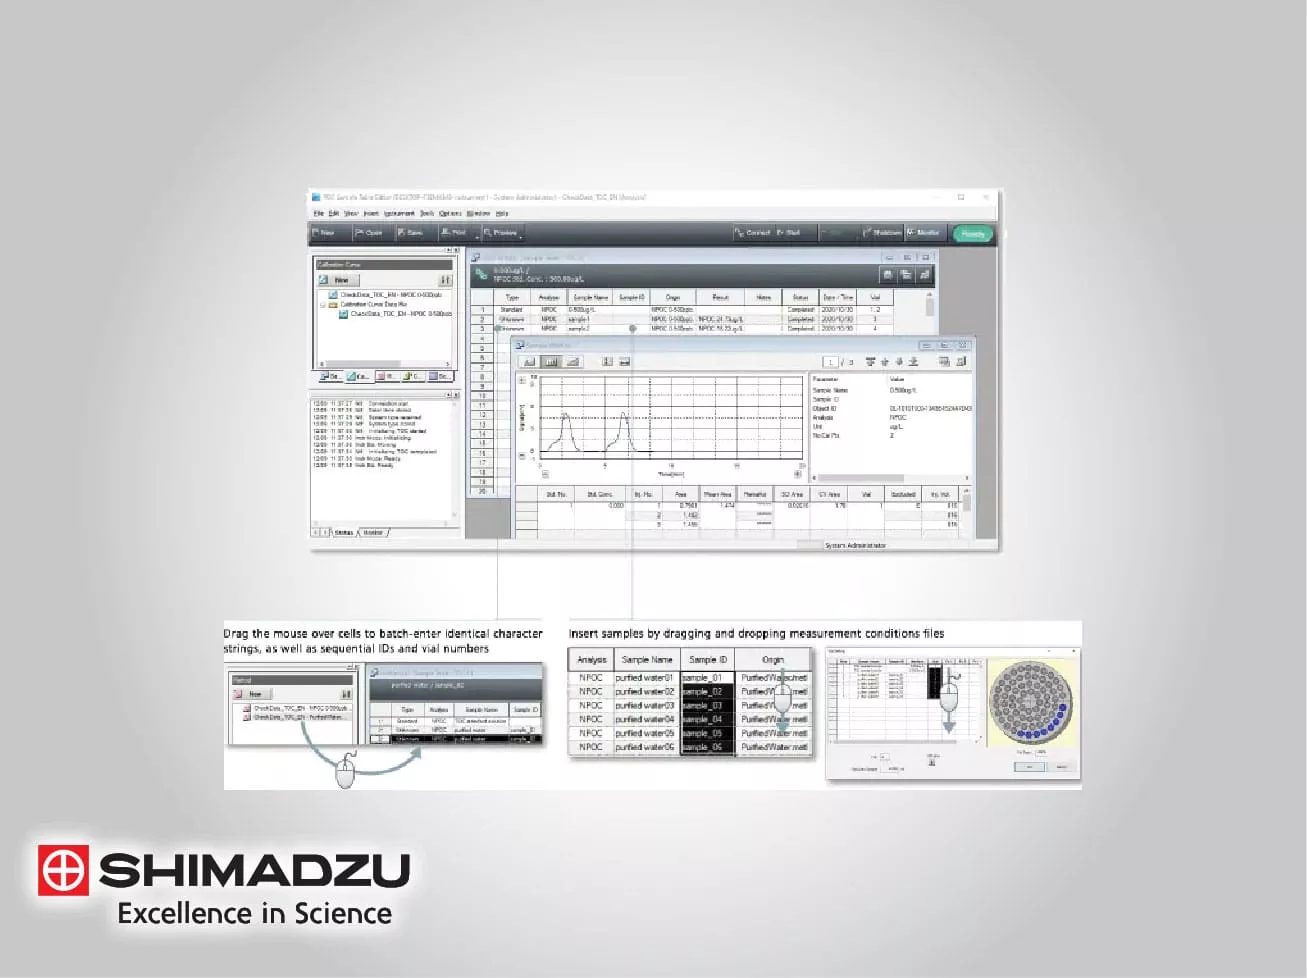 Shimdazu TOC Analysis Software